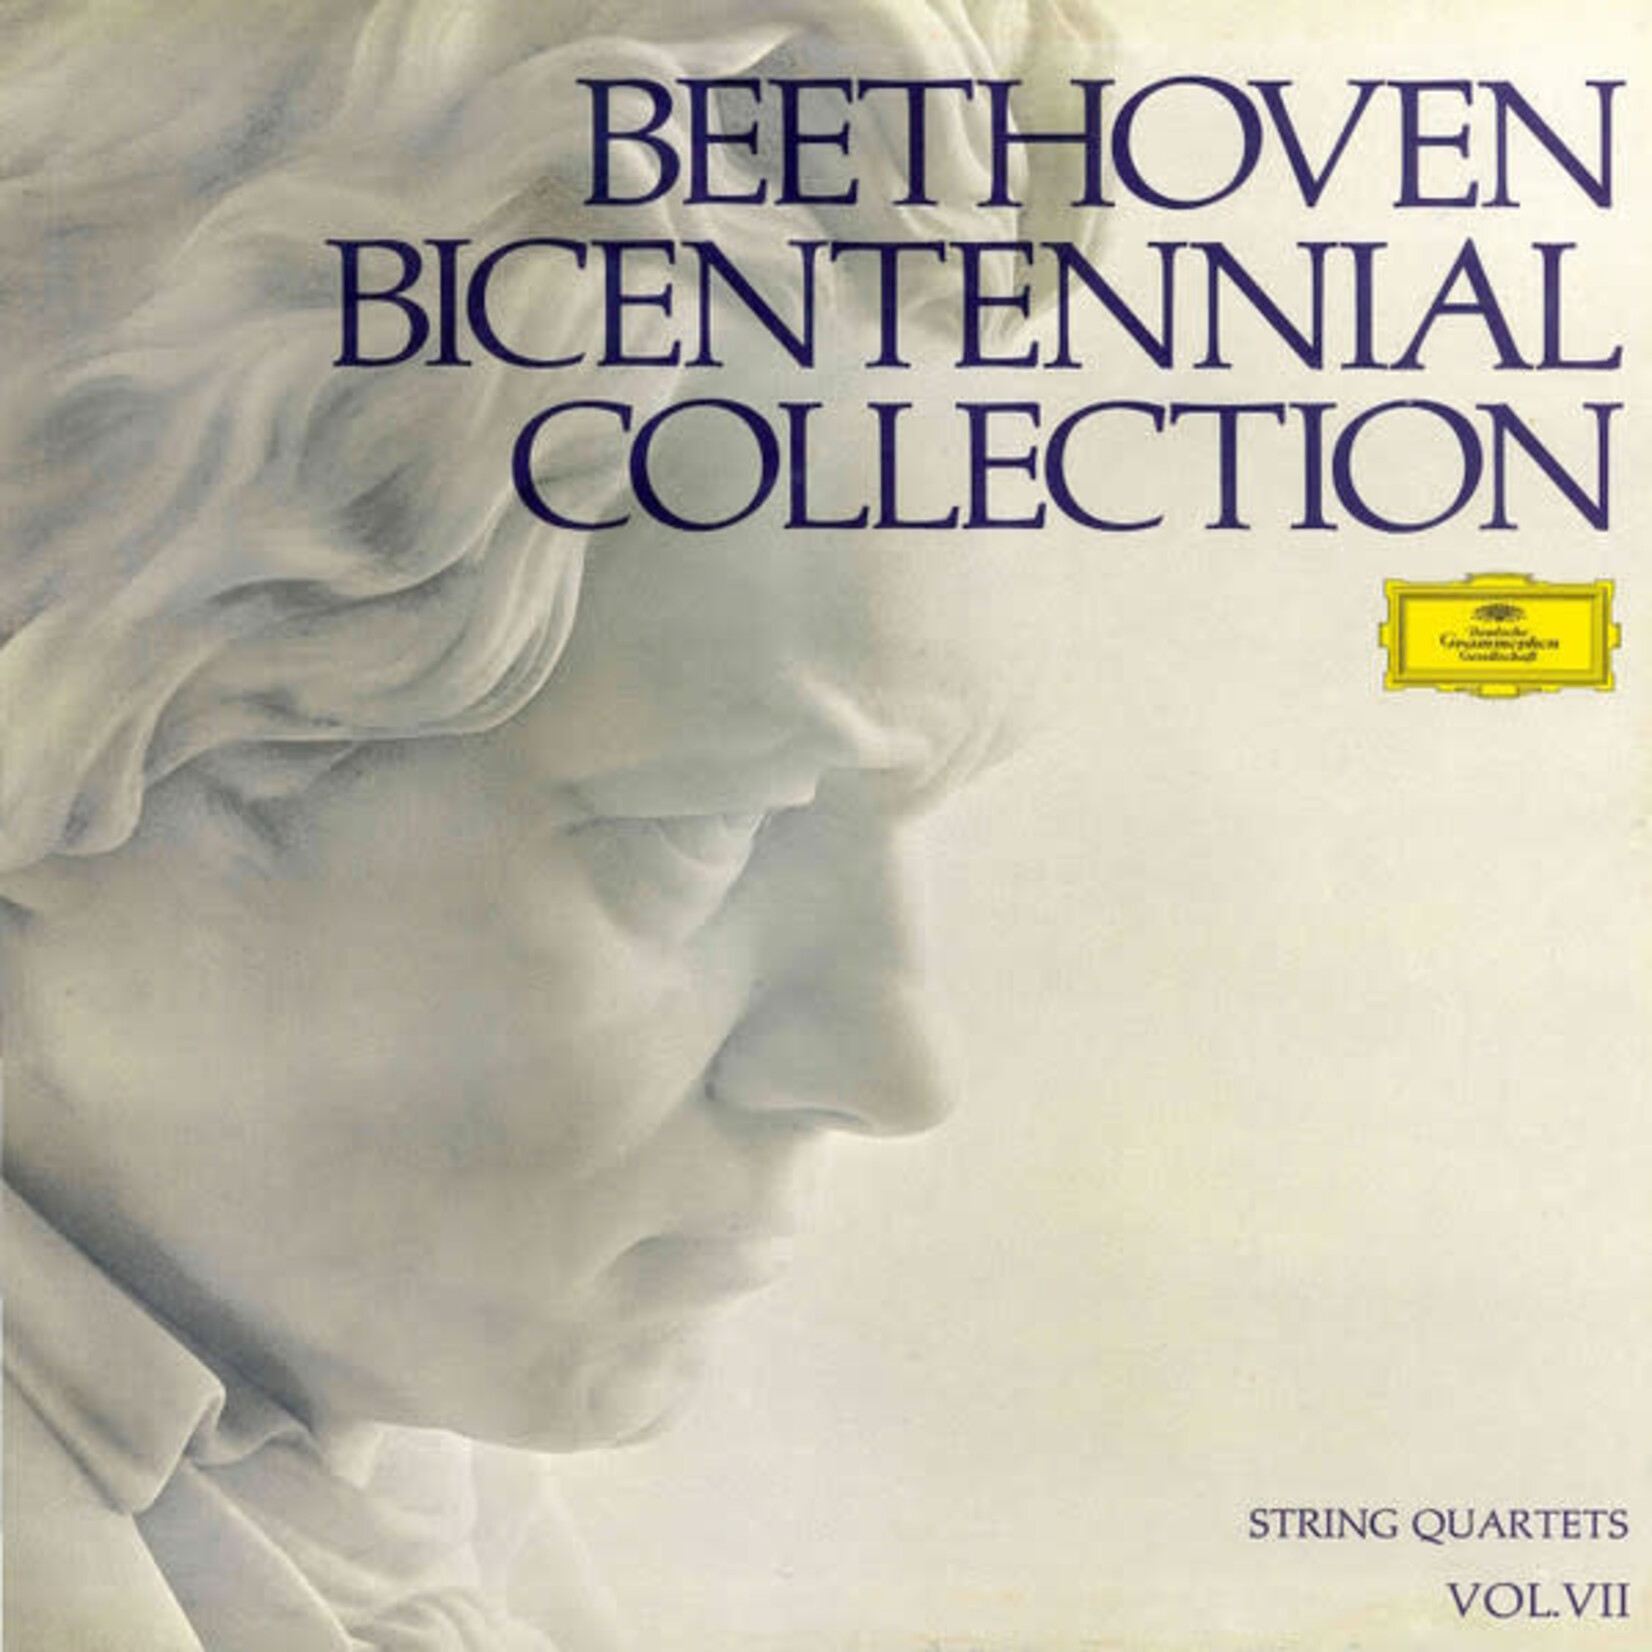 Ludwig van Beethoven Beethoven Bicentennial Collection – String Quartets Part One (Vol. VII) (VG+, 1972, 5xLP, Boxed Set With Booklet, Deutsche Grammophon – STL-47) VESV